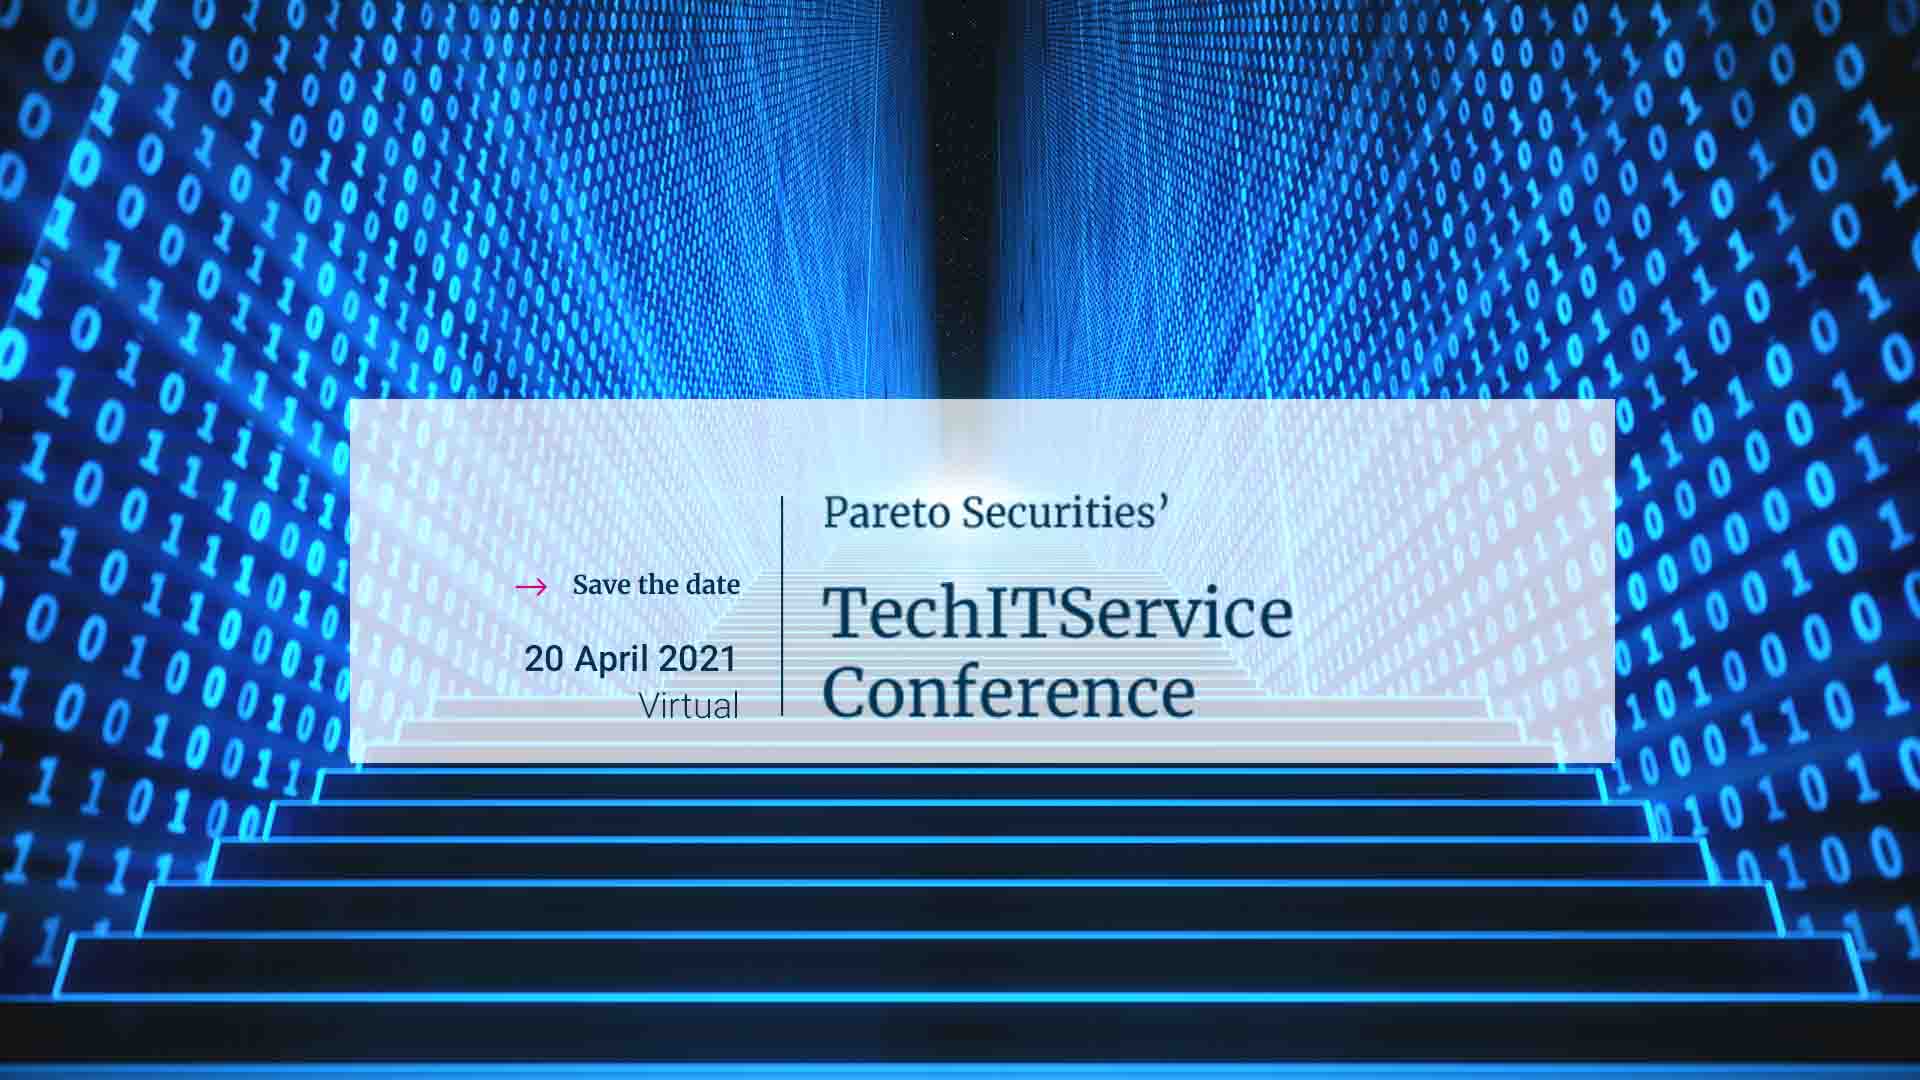 Pareto Securities' TechITService Conference 